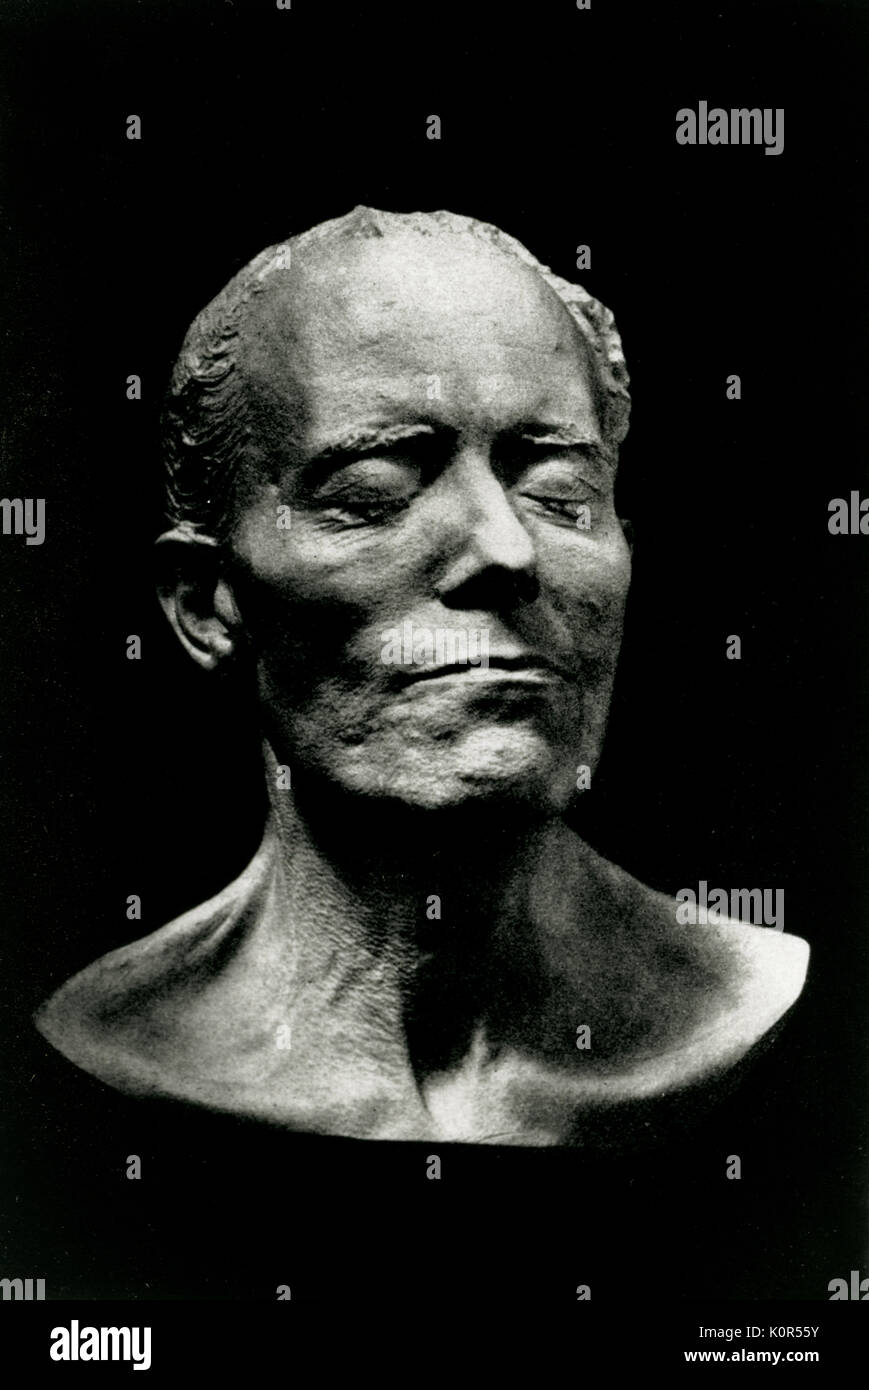 Gustav  Mahler deathmask 1860-1911. Made by Carl Moll. Stock Photo